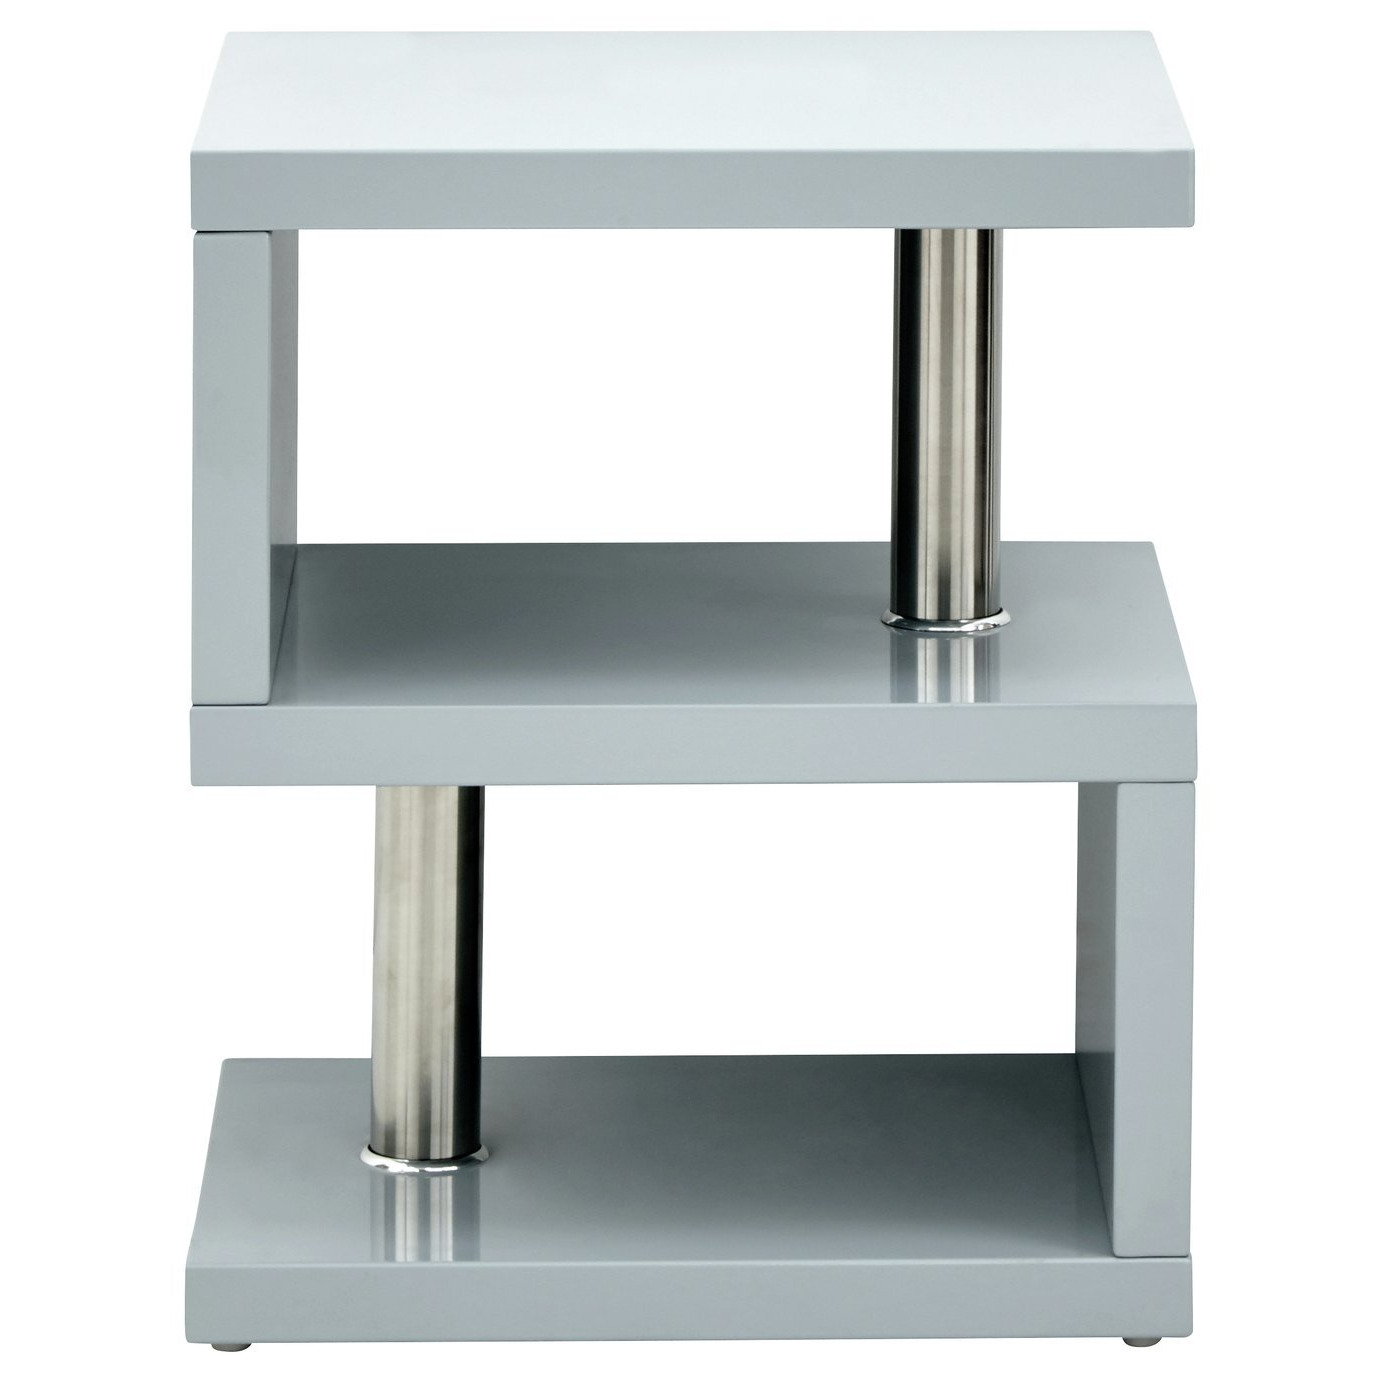 GFW Polar Side Table - Grey Gloss - image 1